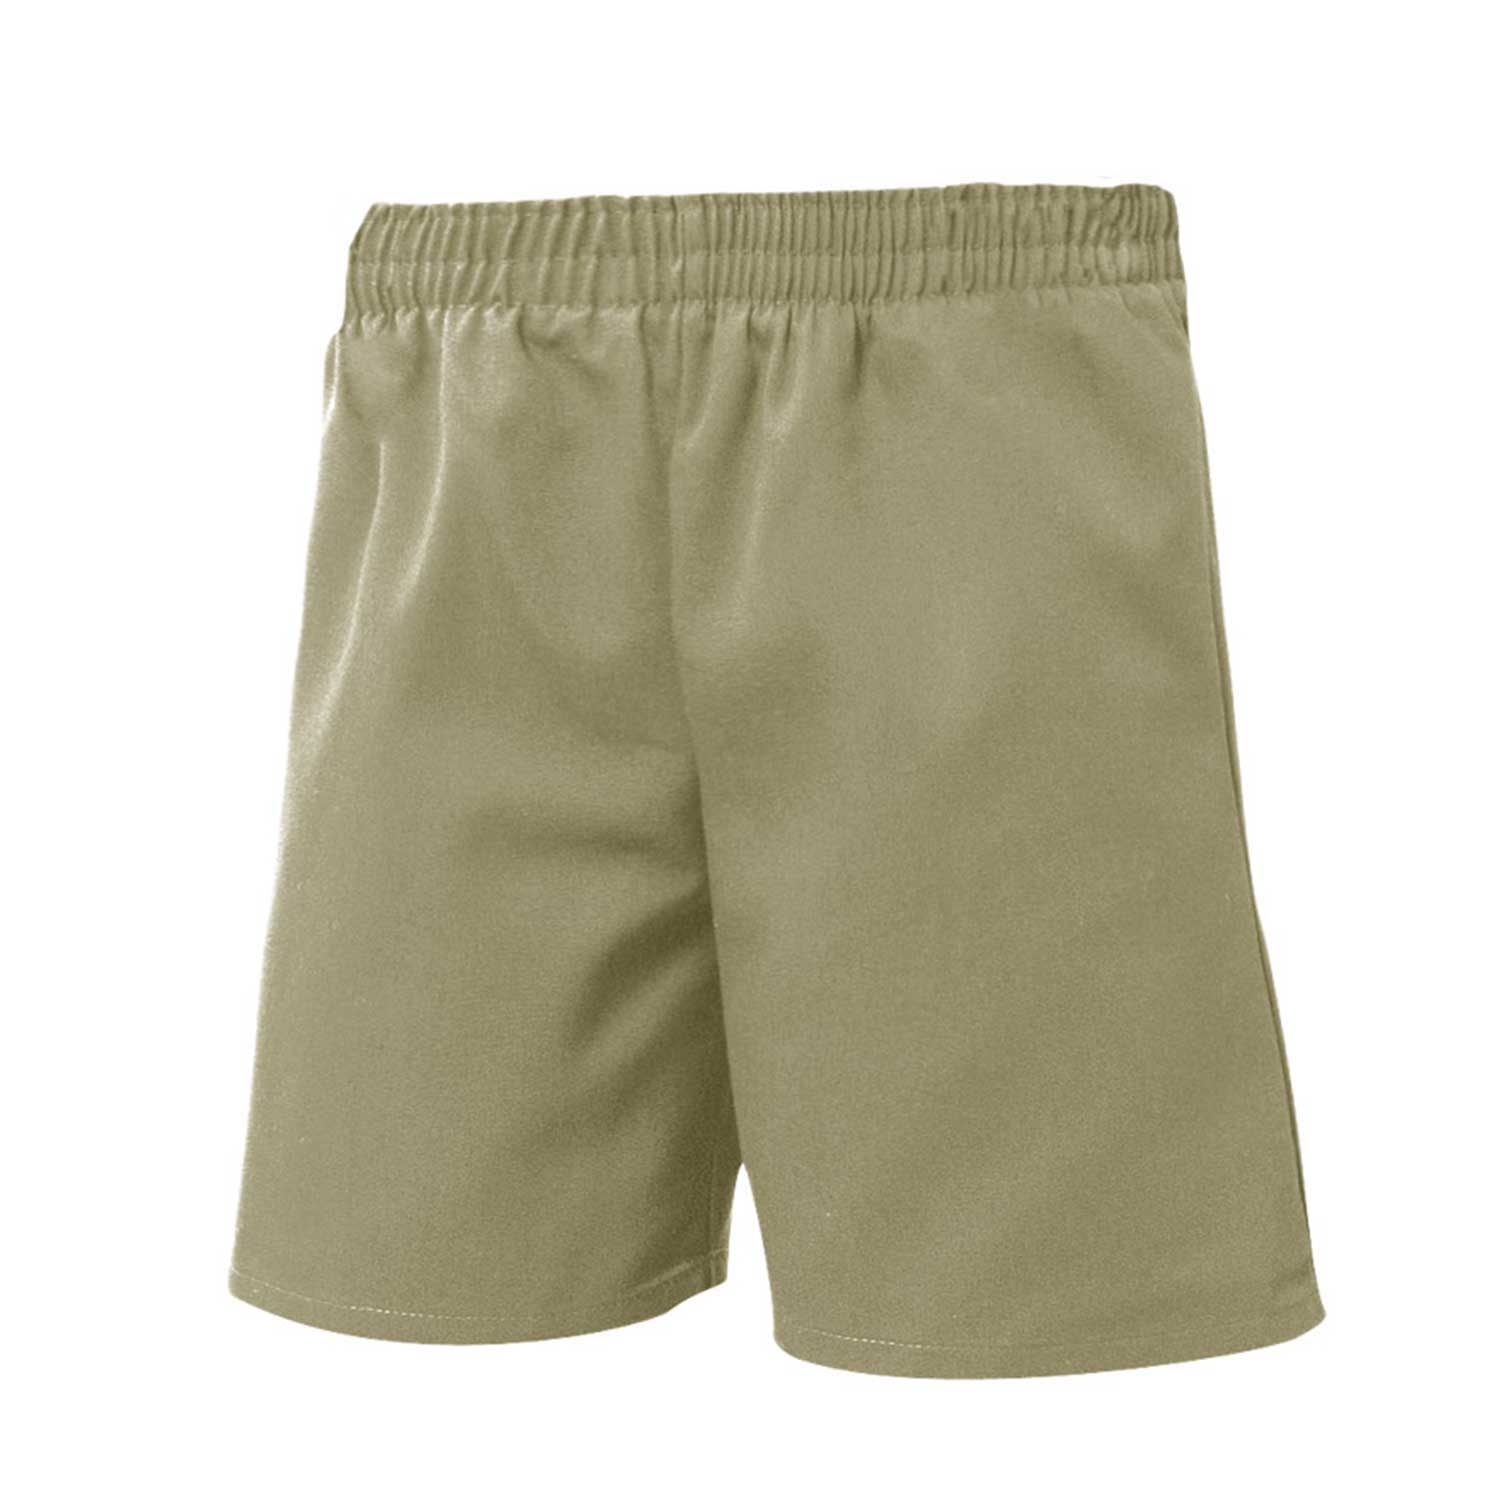 Unisex Pull-On Shorts - All Around Elastic - #1251/7067 - Khaki